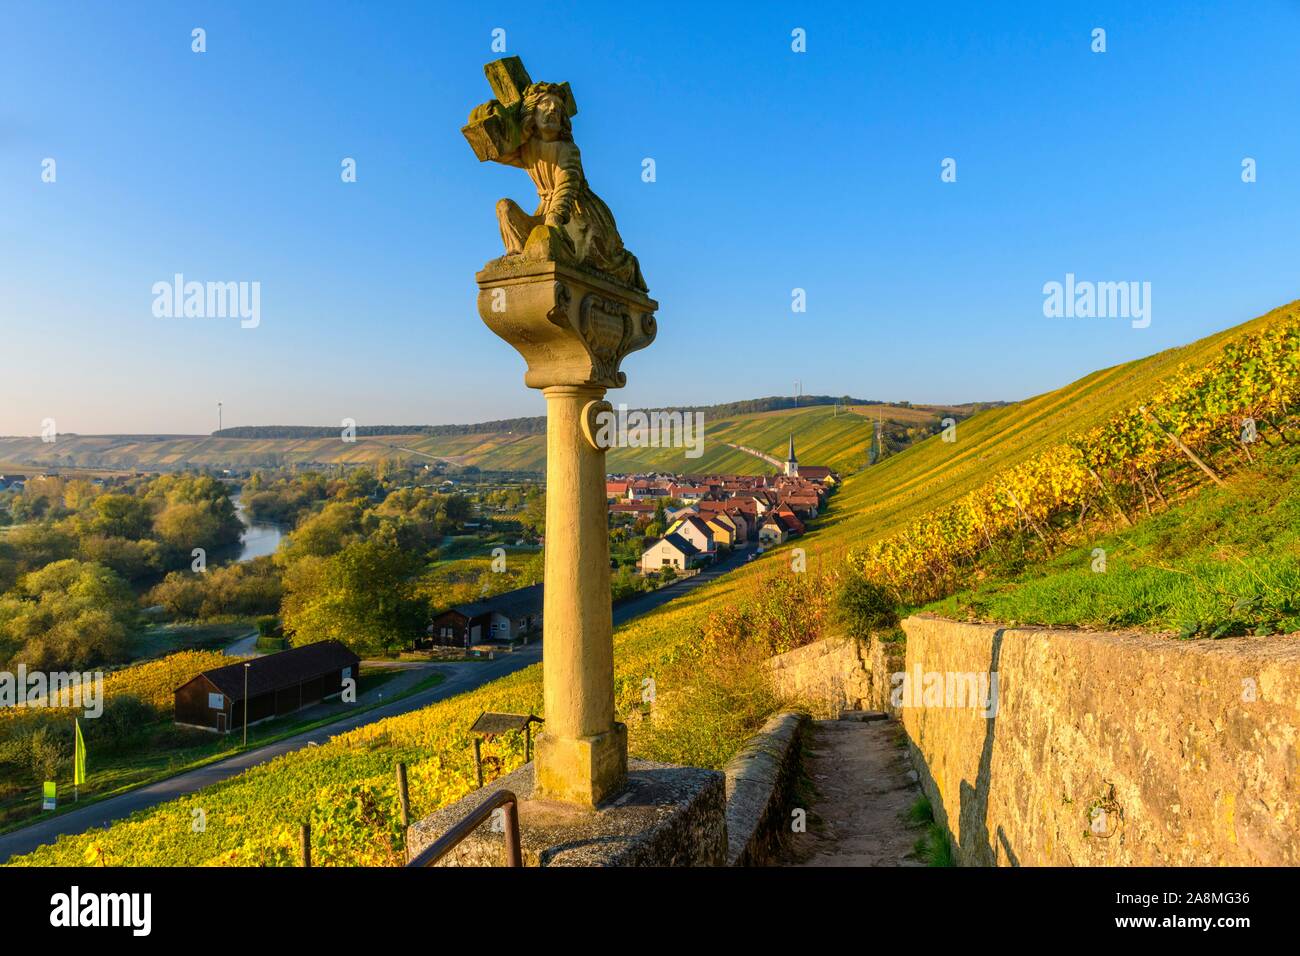 Cloister in the vineyards near Escherndorf am Main near Volkach, Lower Franconia, Bavaria, Germany Stock Photo